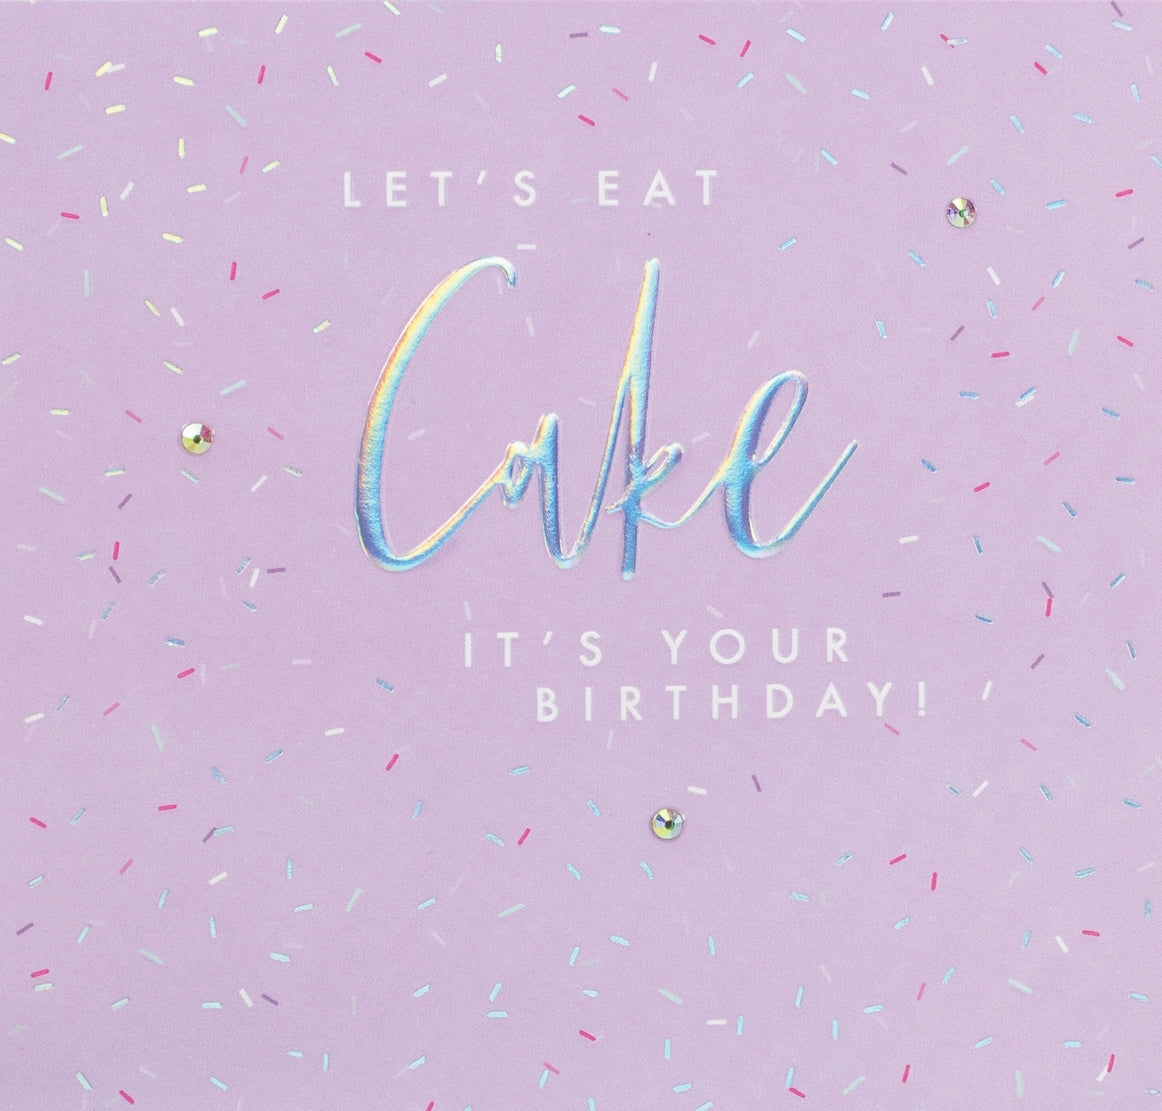 Aurora - Let's Eat Cake it's your Birthday!